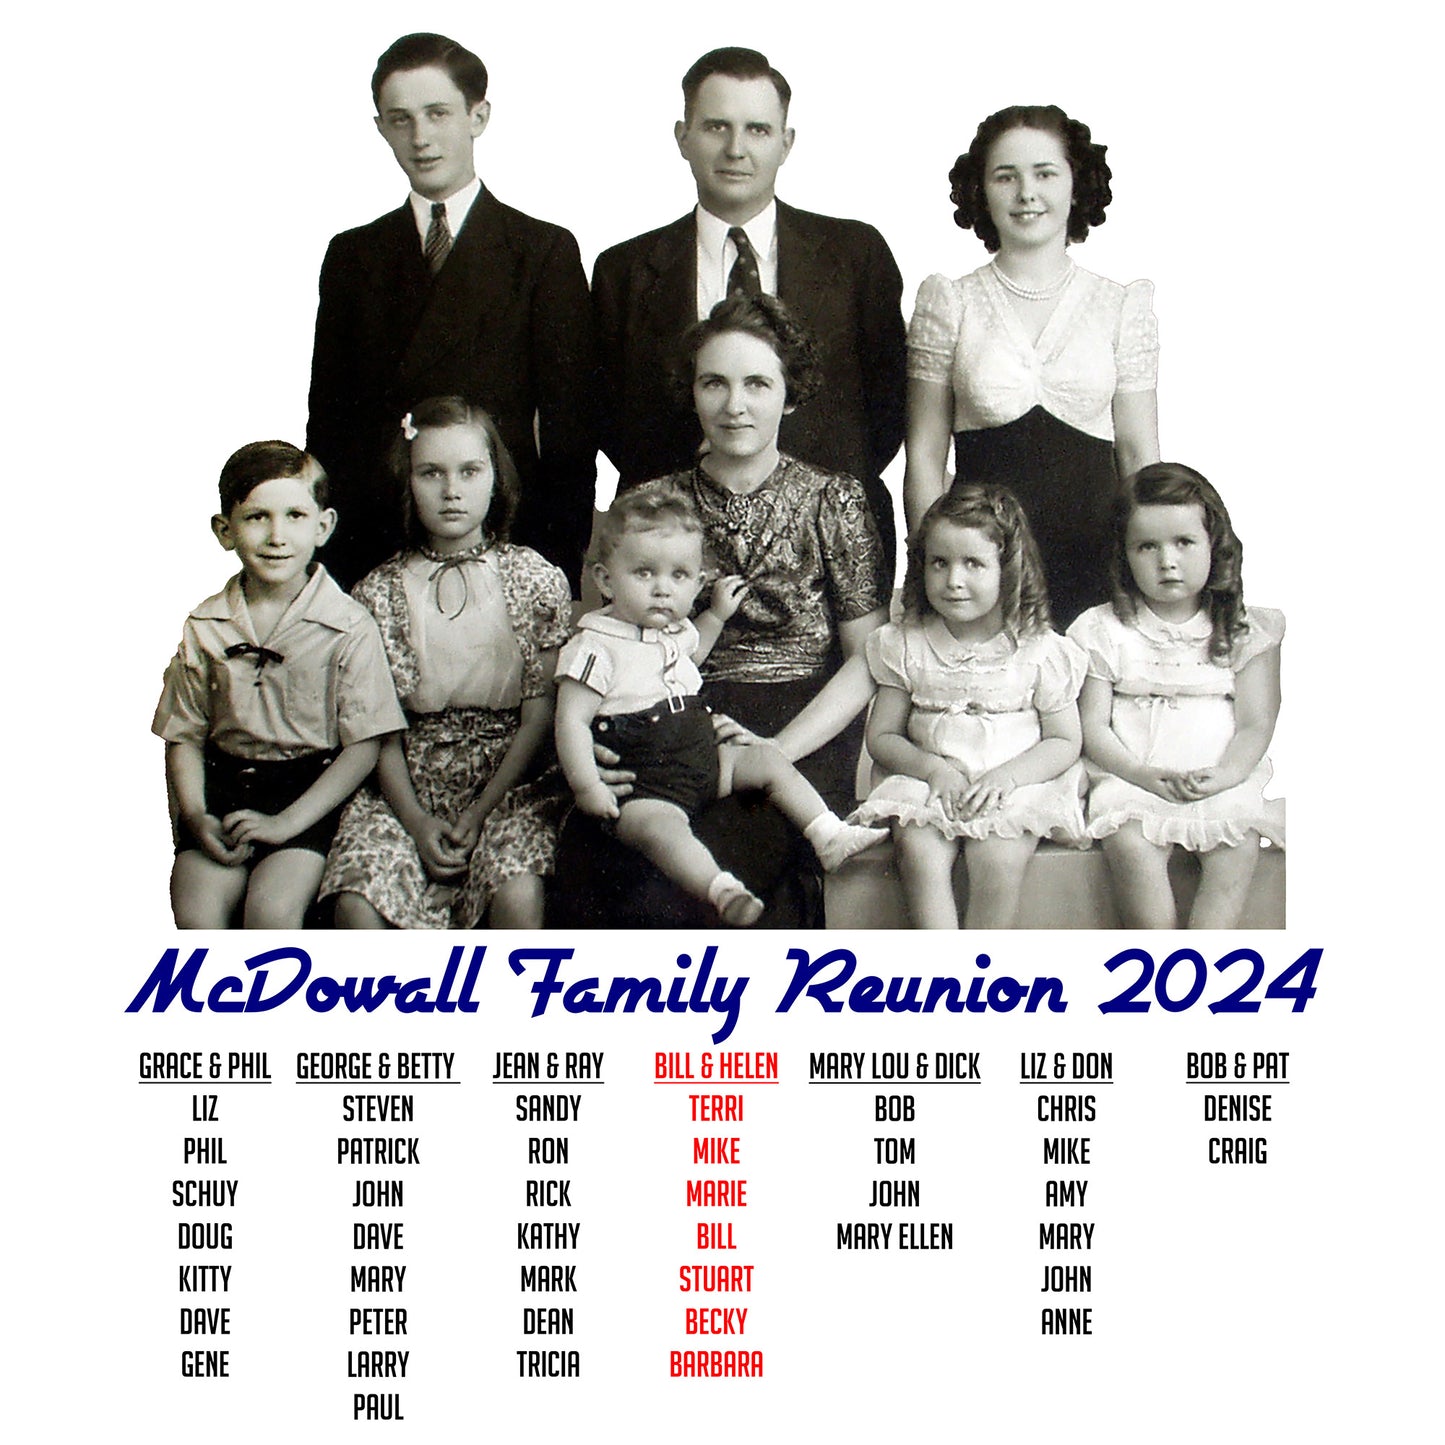 Bill & Helen - McDowall Family Reunion (Toddler Short Sleeve Tee - Front Design only)